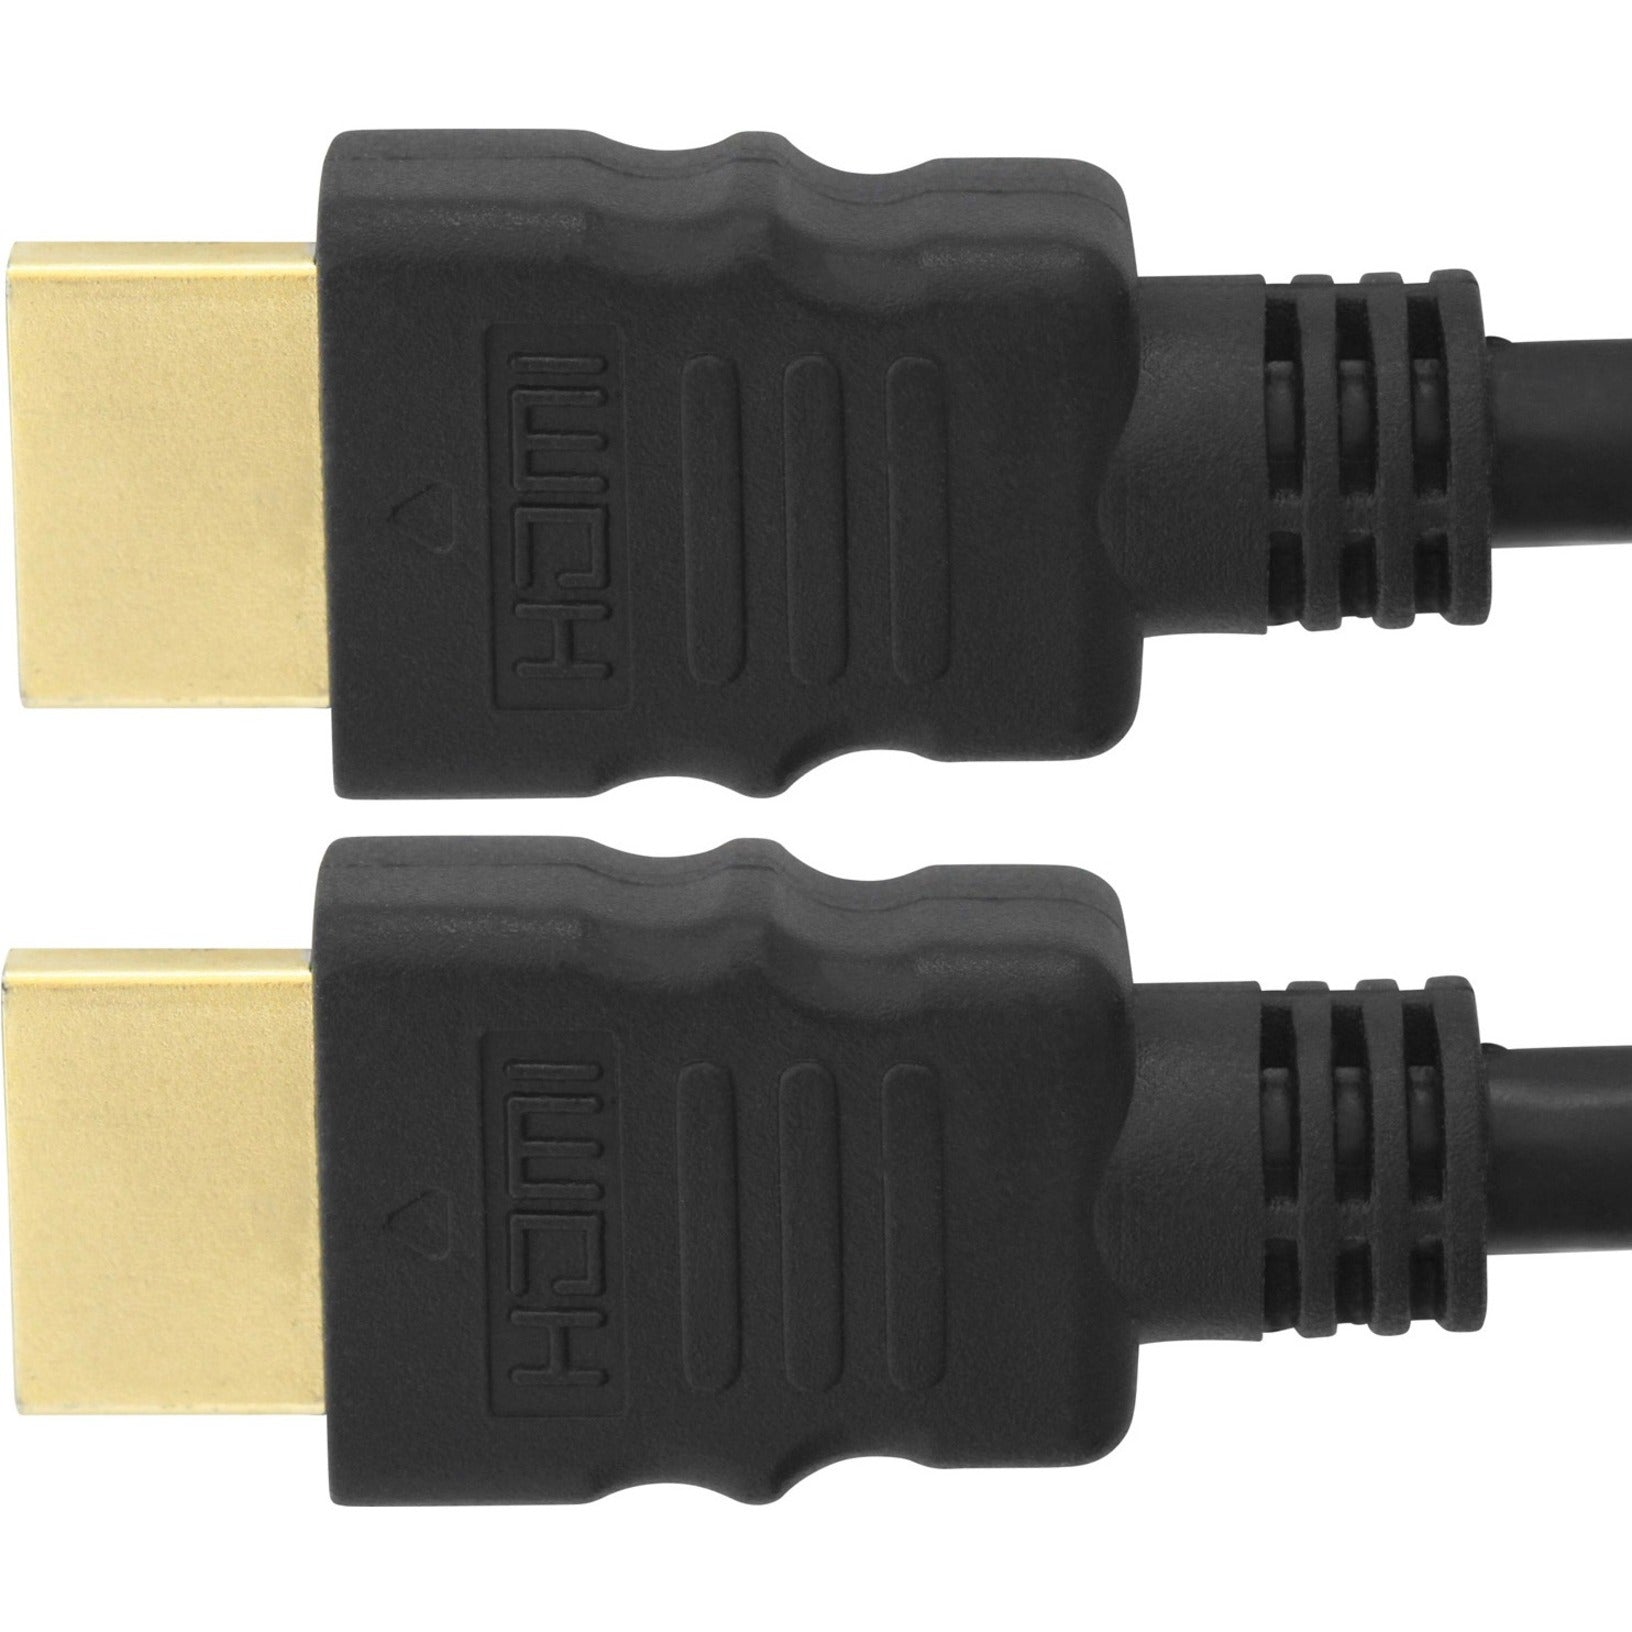 4XEM - 四倍EM 4XHDMIMM15FT - 15英尺高速HDMI线 High Speed - 高速 HDMI Cable - HDMI 线 1080p - 1080p 3D - 3D Ethernet - 以太网 Audio Return Channel - 音频回传通道